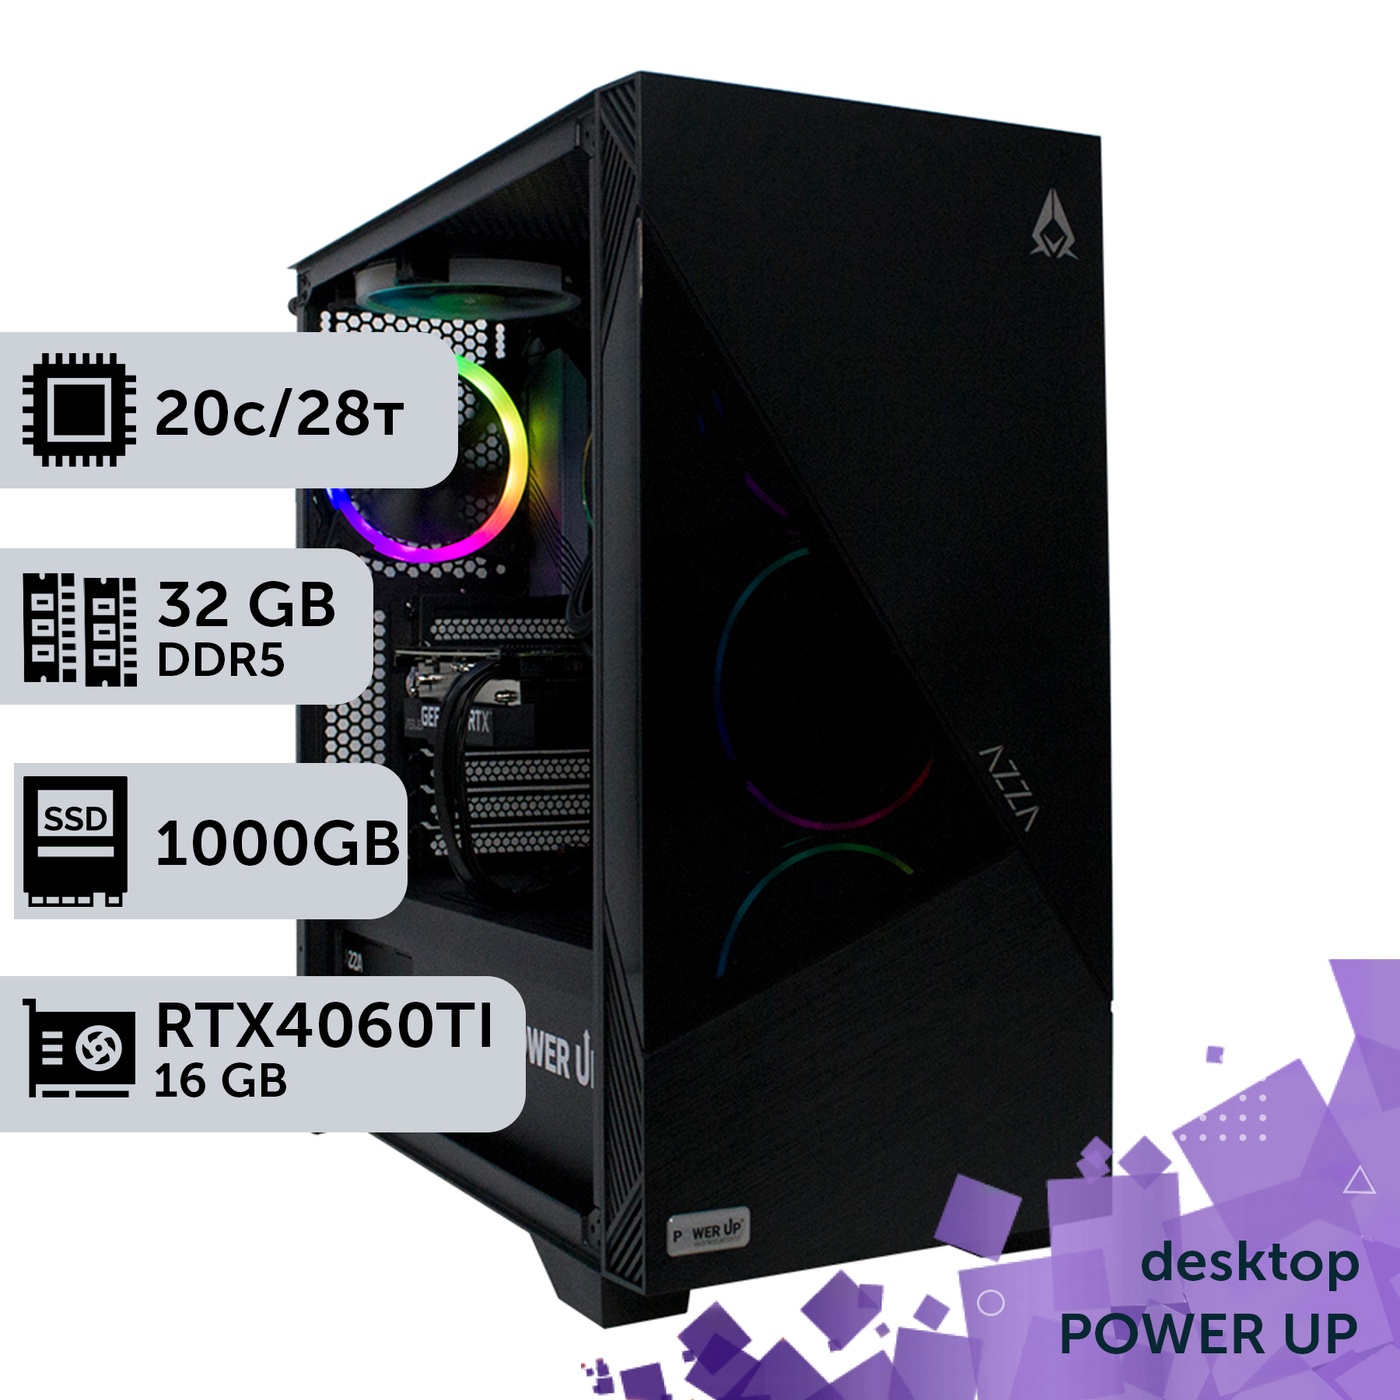 Рабочая станция PowerUp Desktop #316 Core i7 14700K/32 GB/SSD 1TB/GeForce RTX 4060Ti 16GB